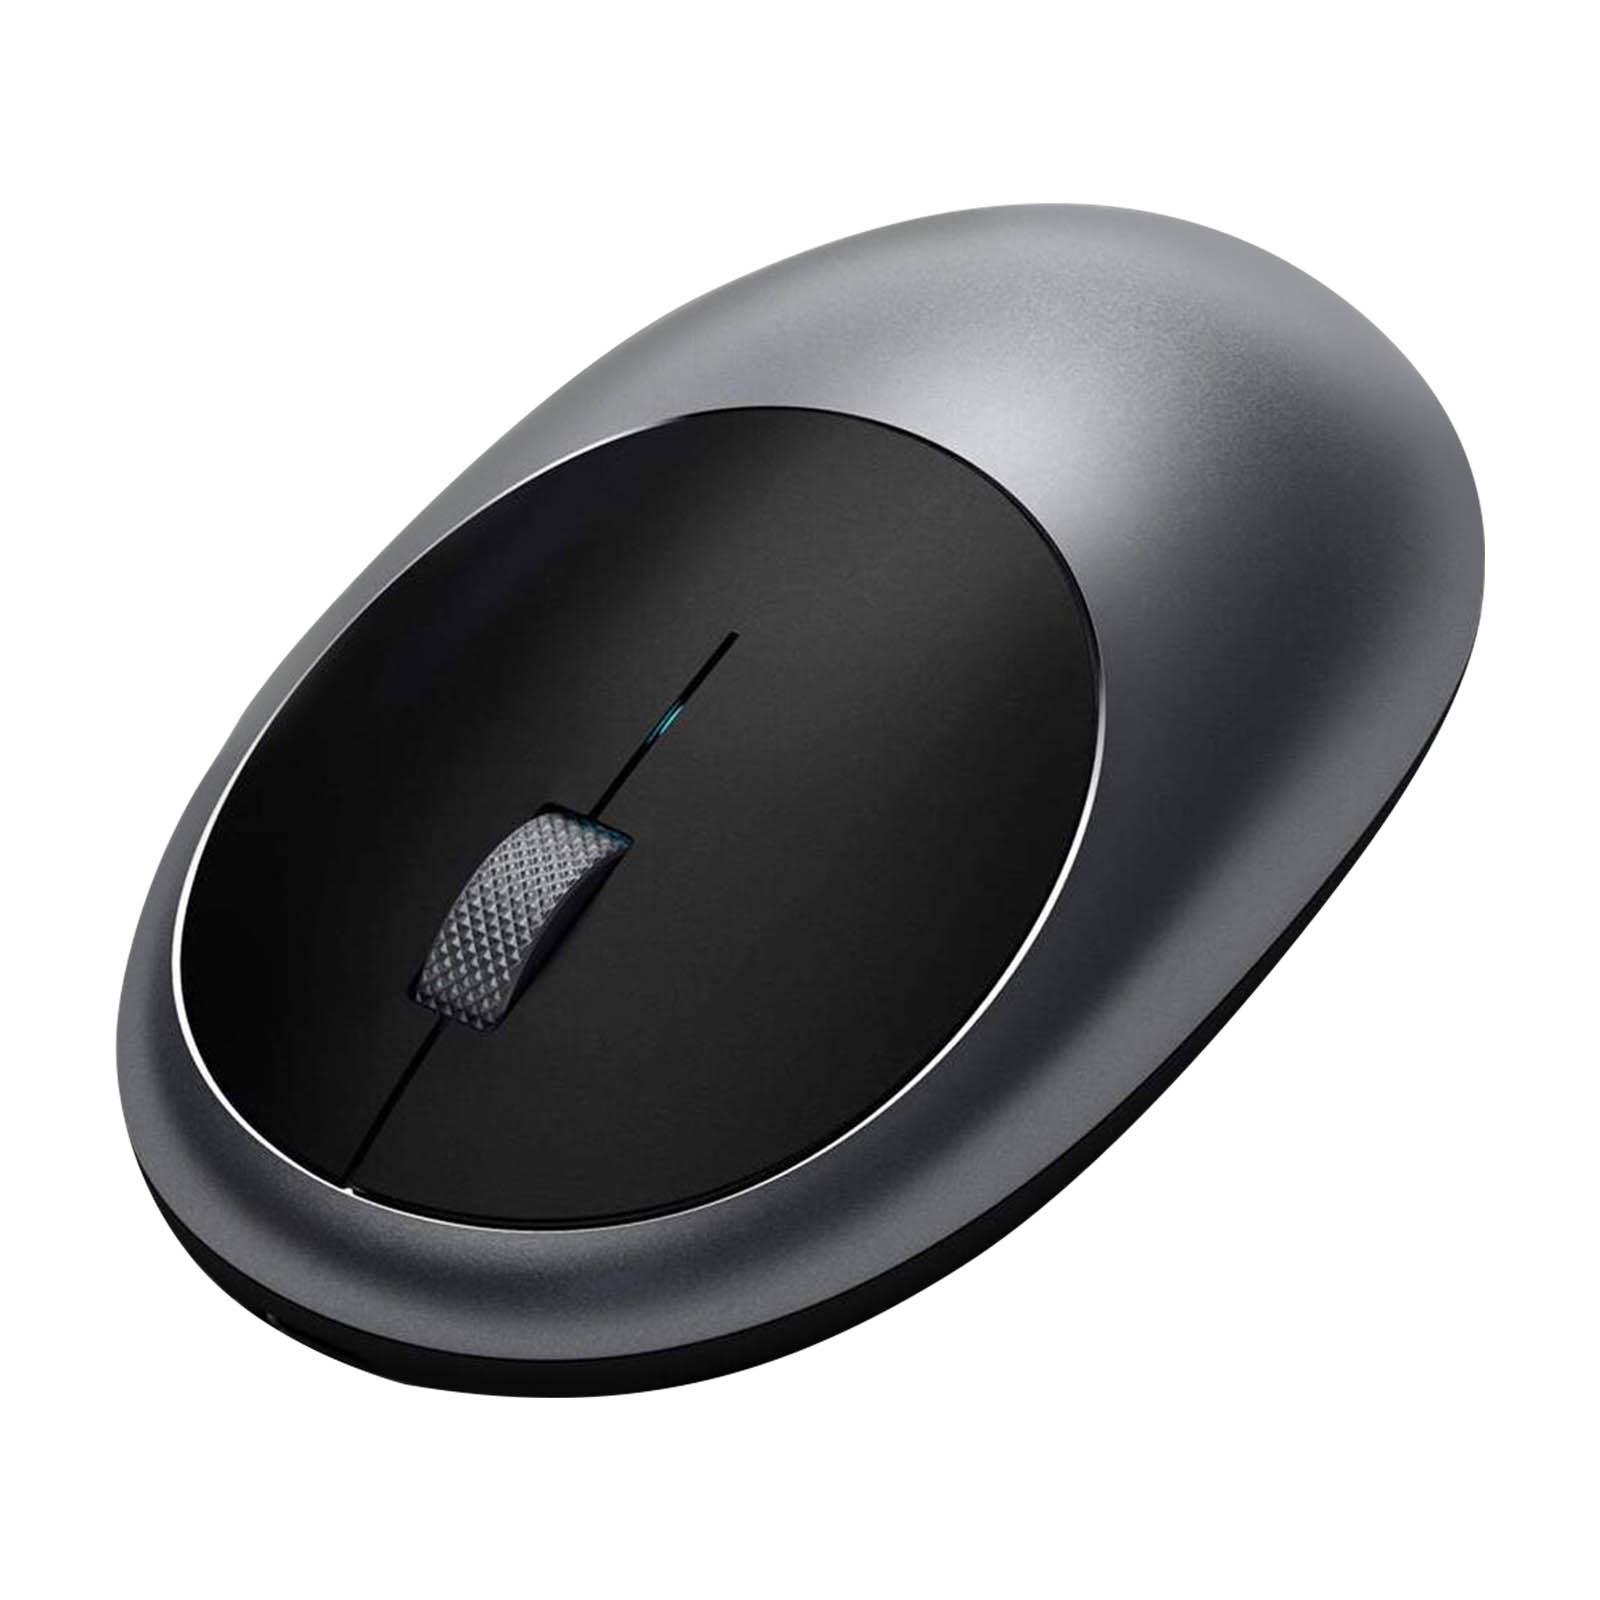 SATECHI  Mouse Bluetooth Satechi M1 grigio 